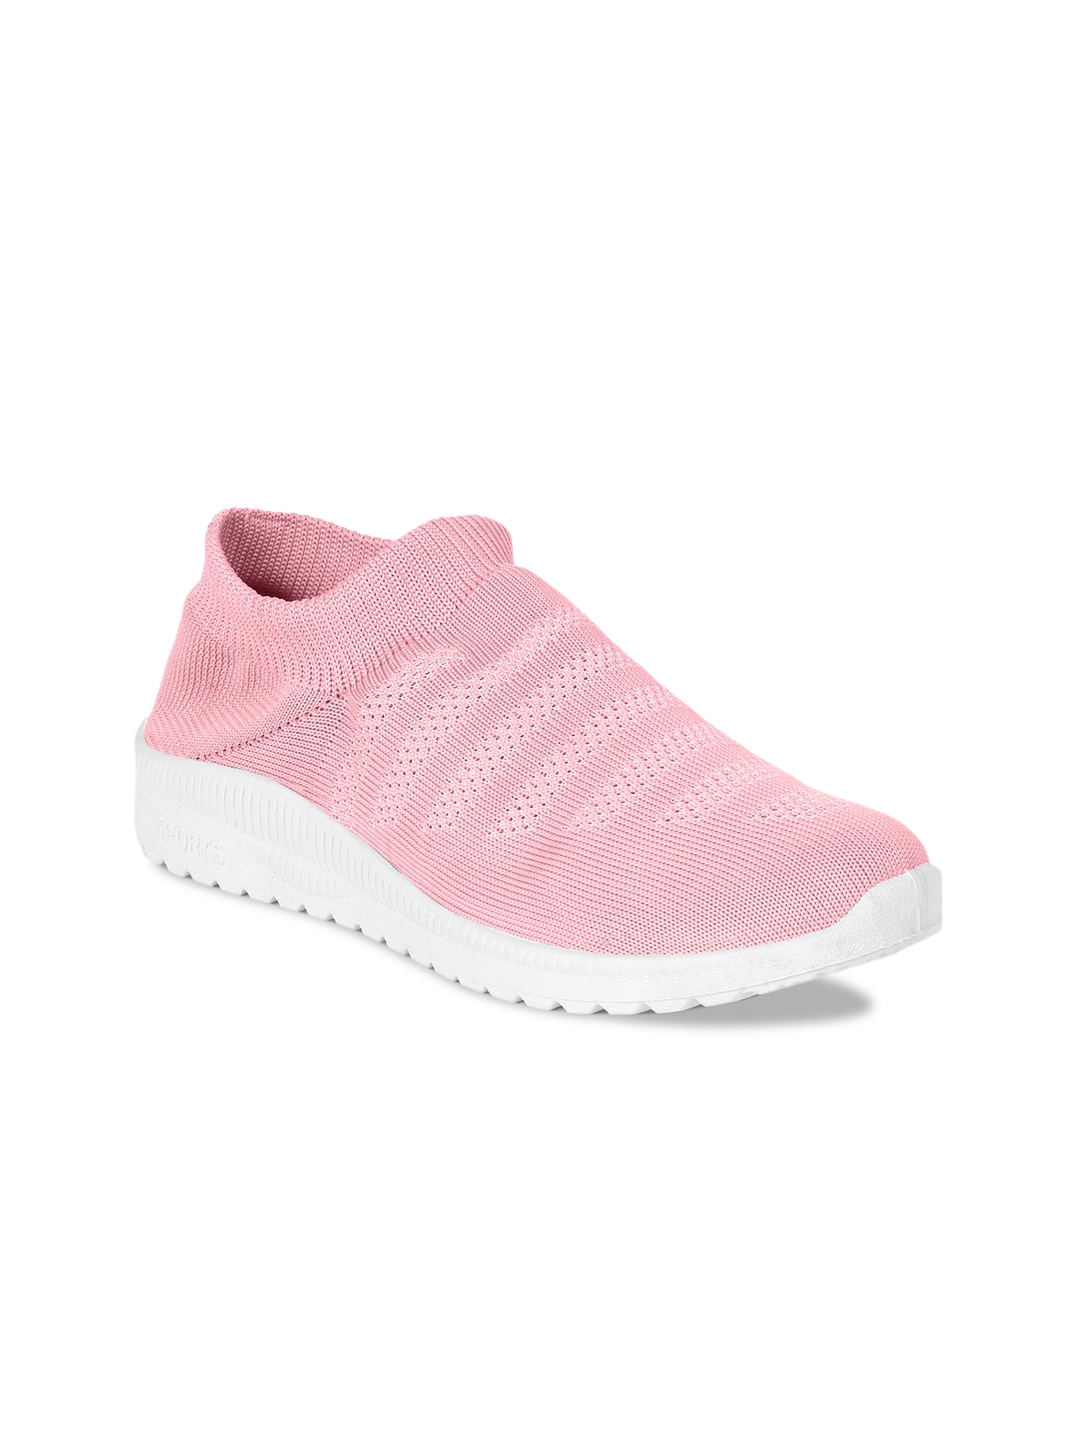 Buy ZAPATOZ Women Pink Textile Walking Shoes - Sports Shoes for Women ...